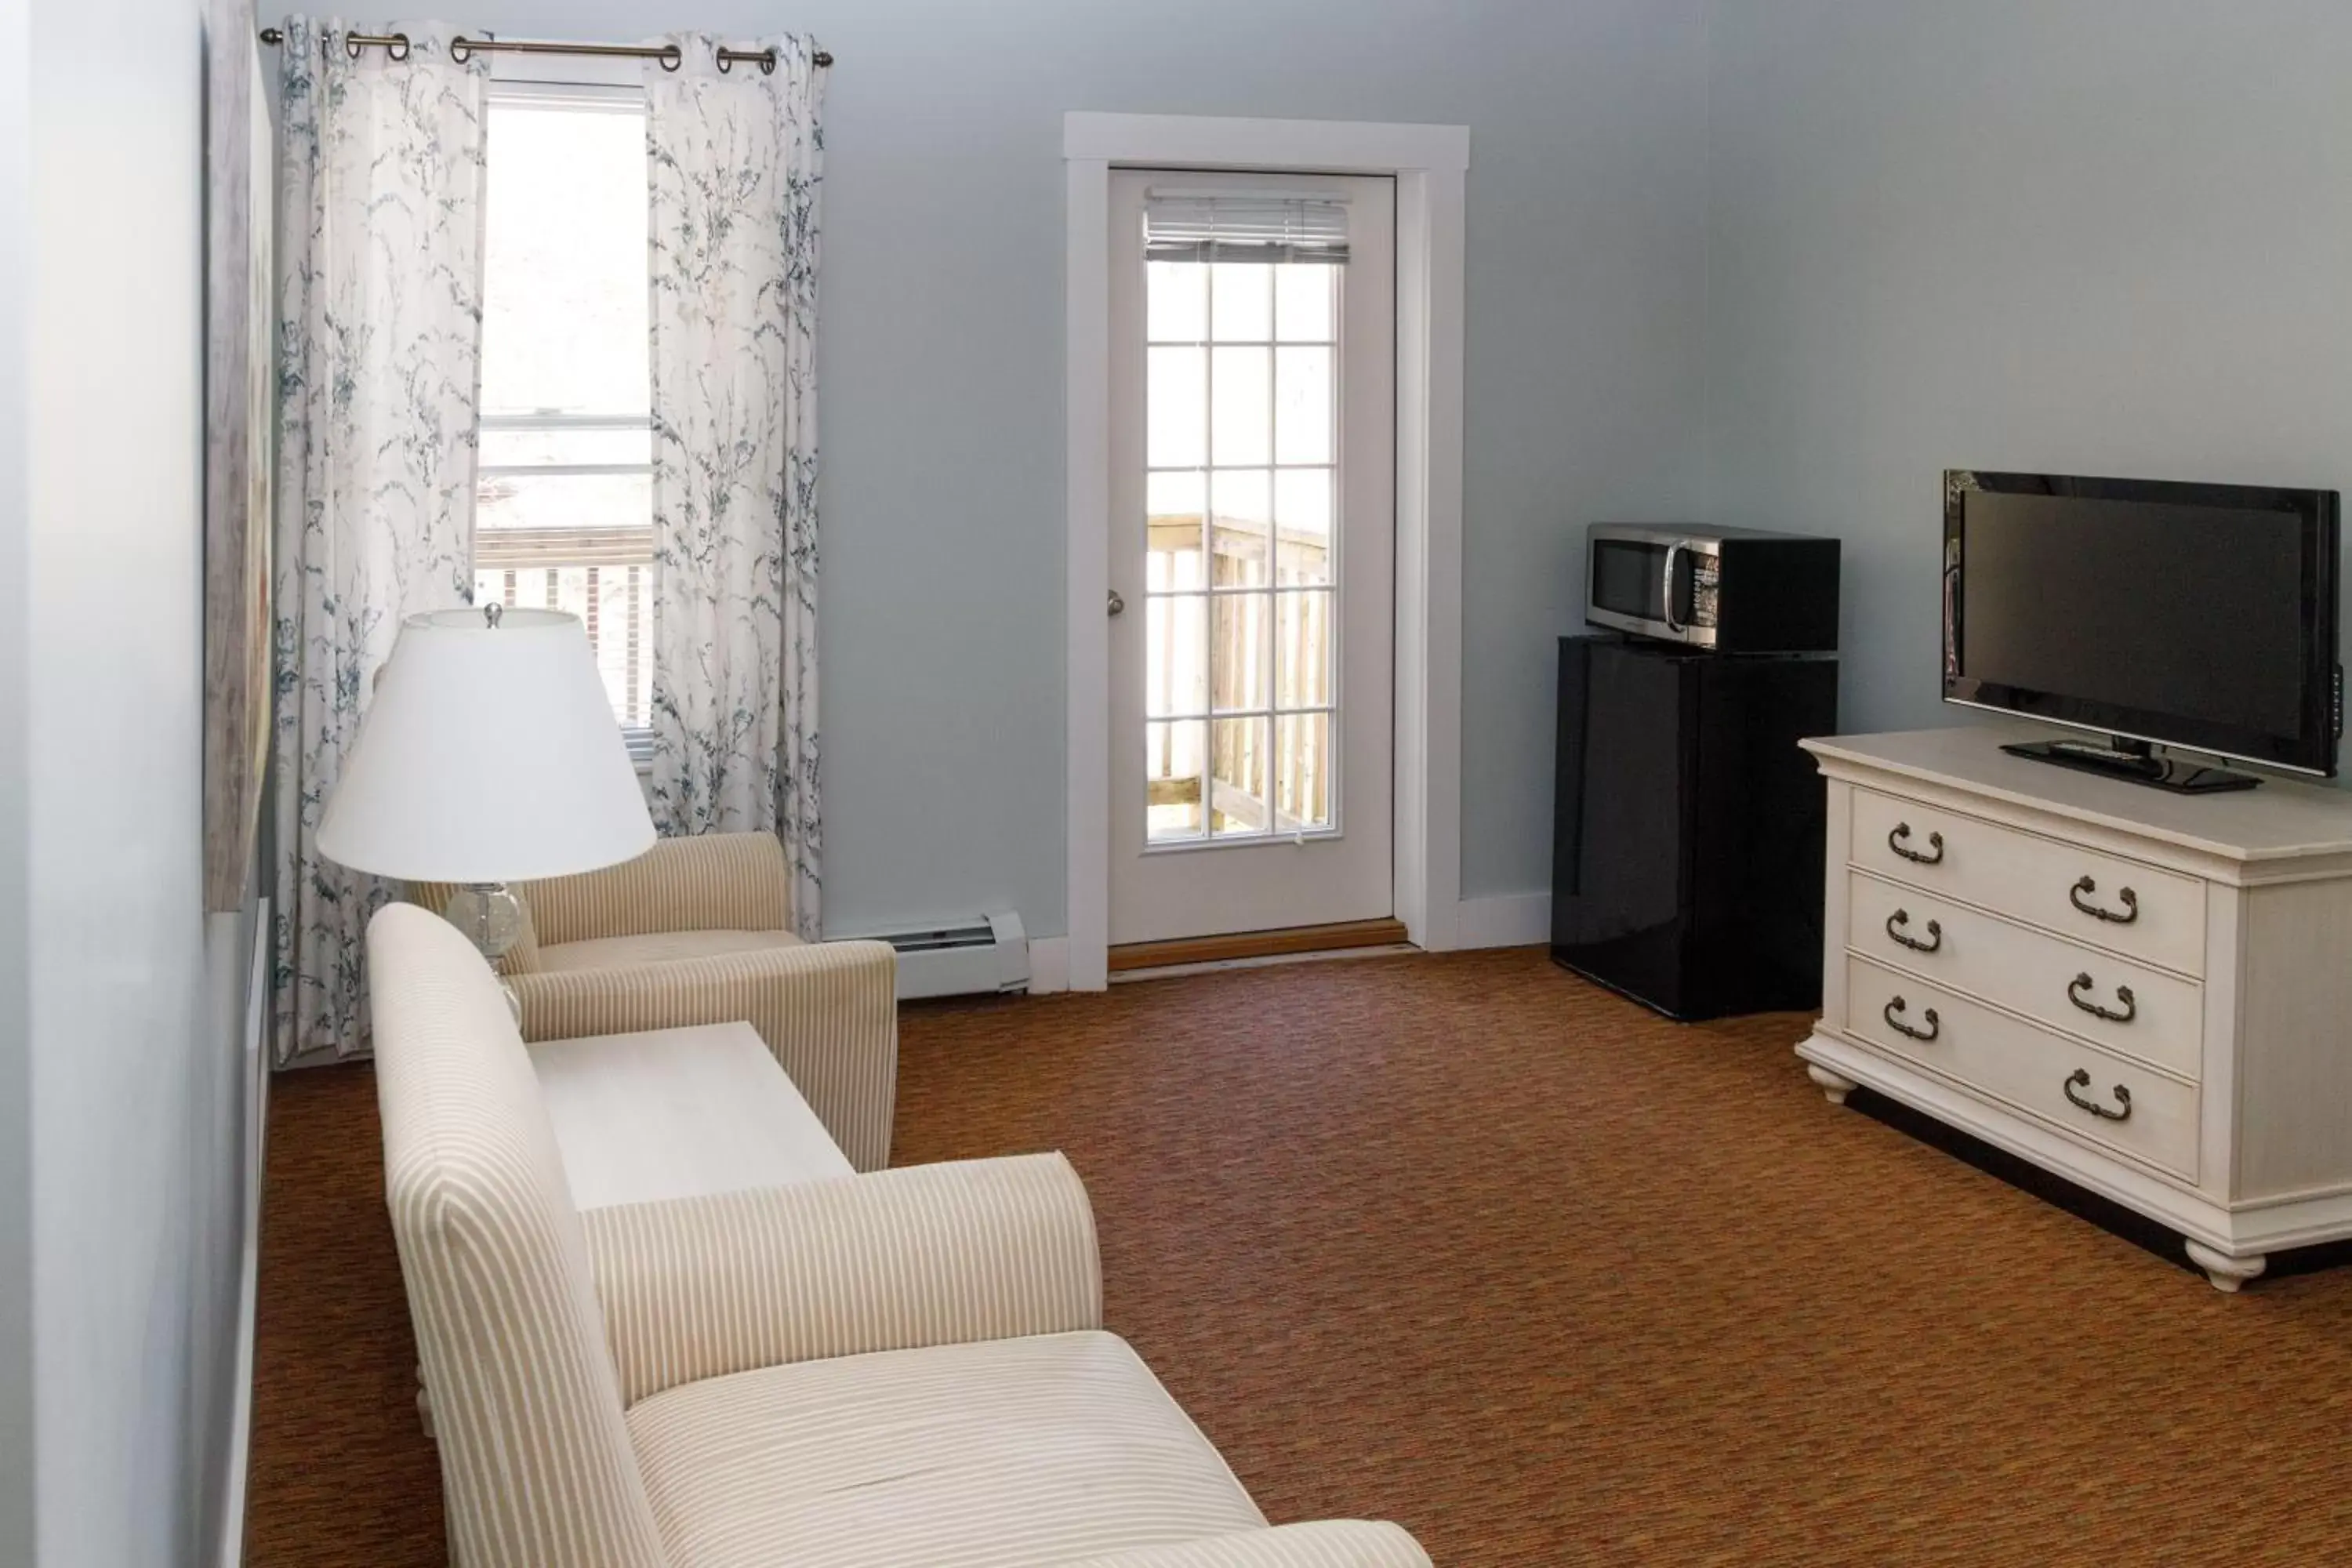 Bedroom, Seating Area in Admiral's Inn Resort